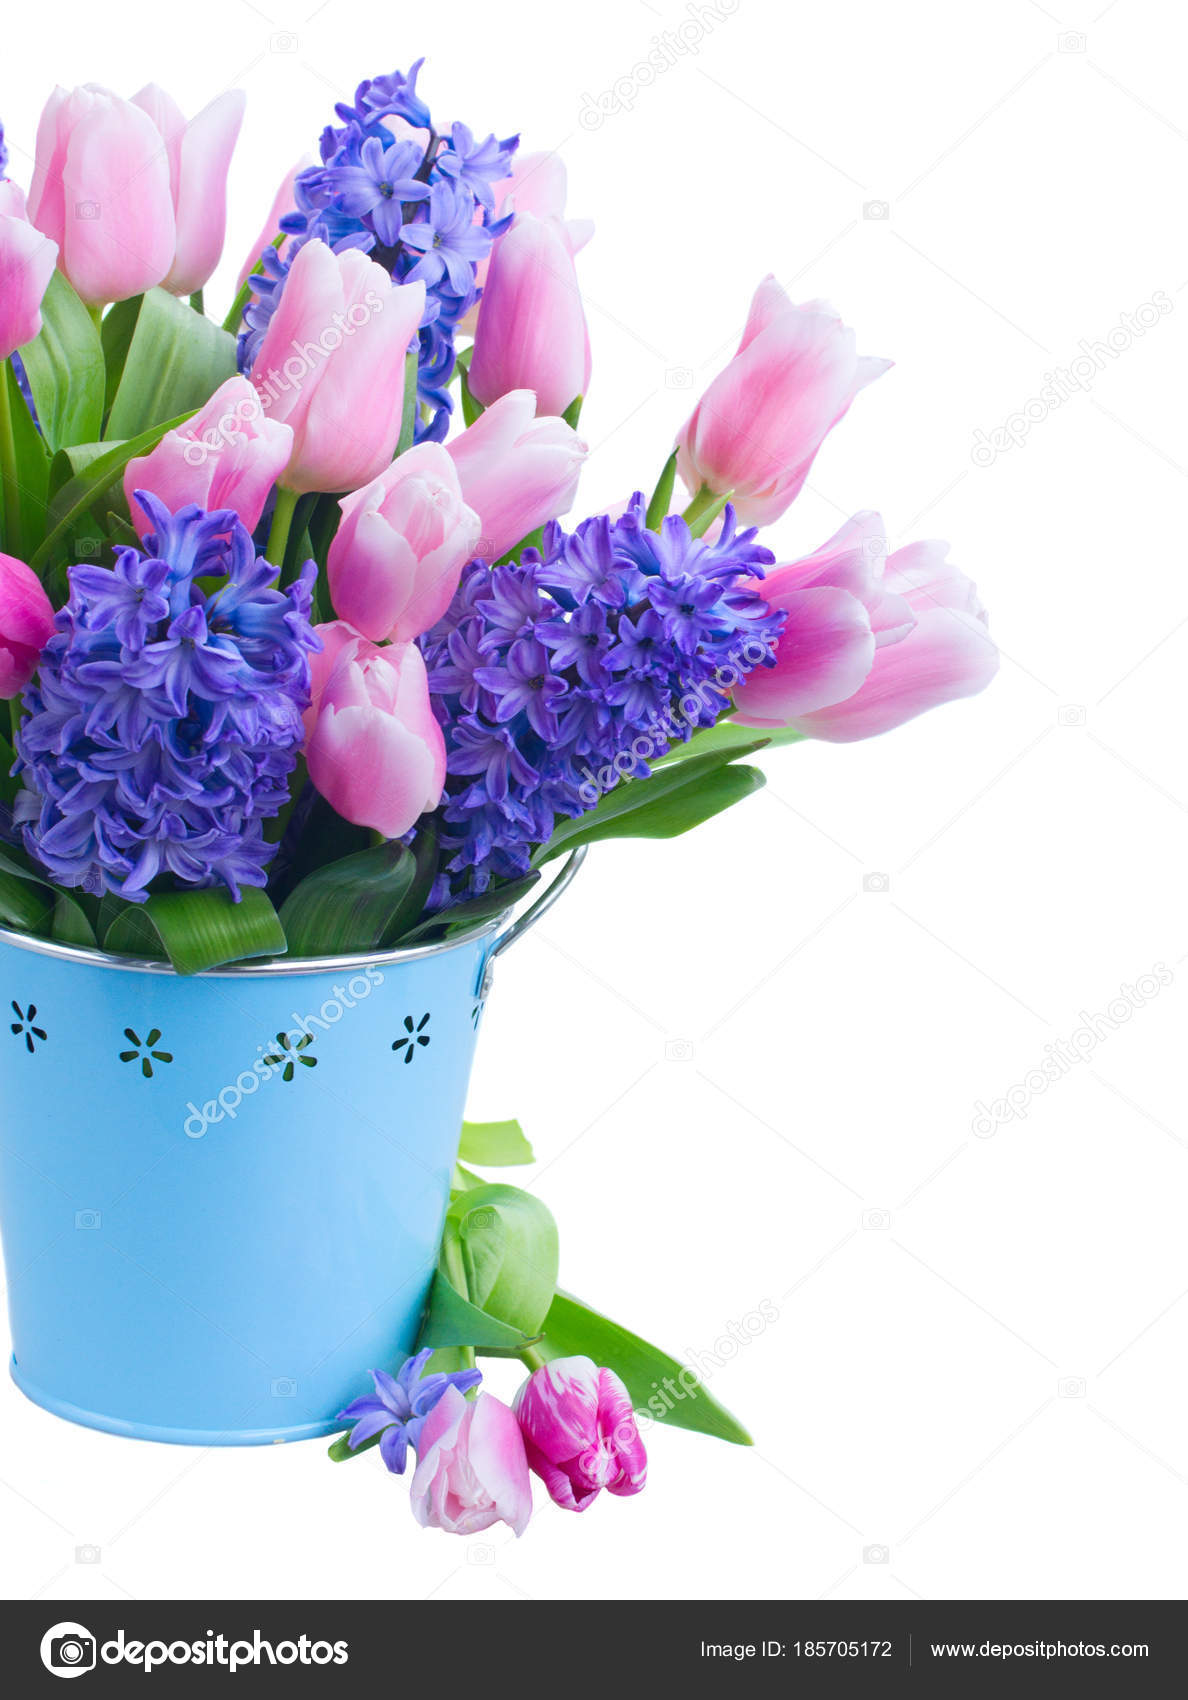 hyacinths and tulips — Stock Photo © Neirfys #185705172